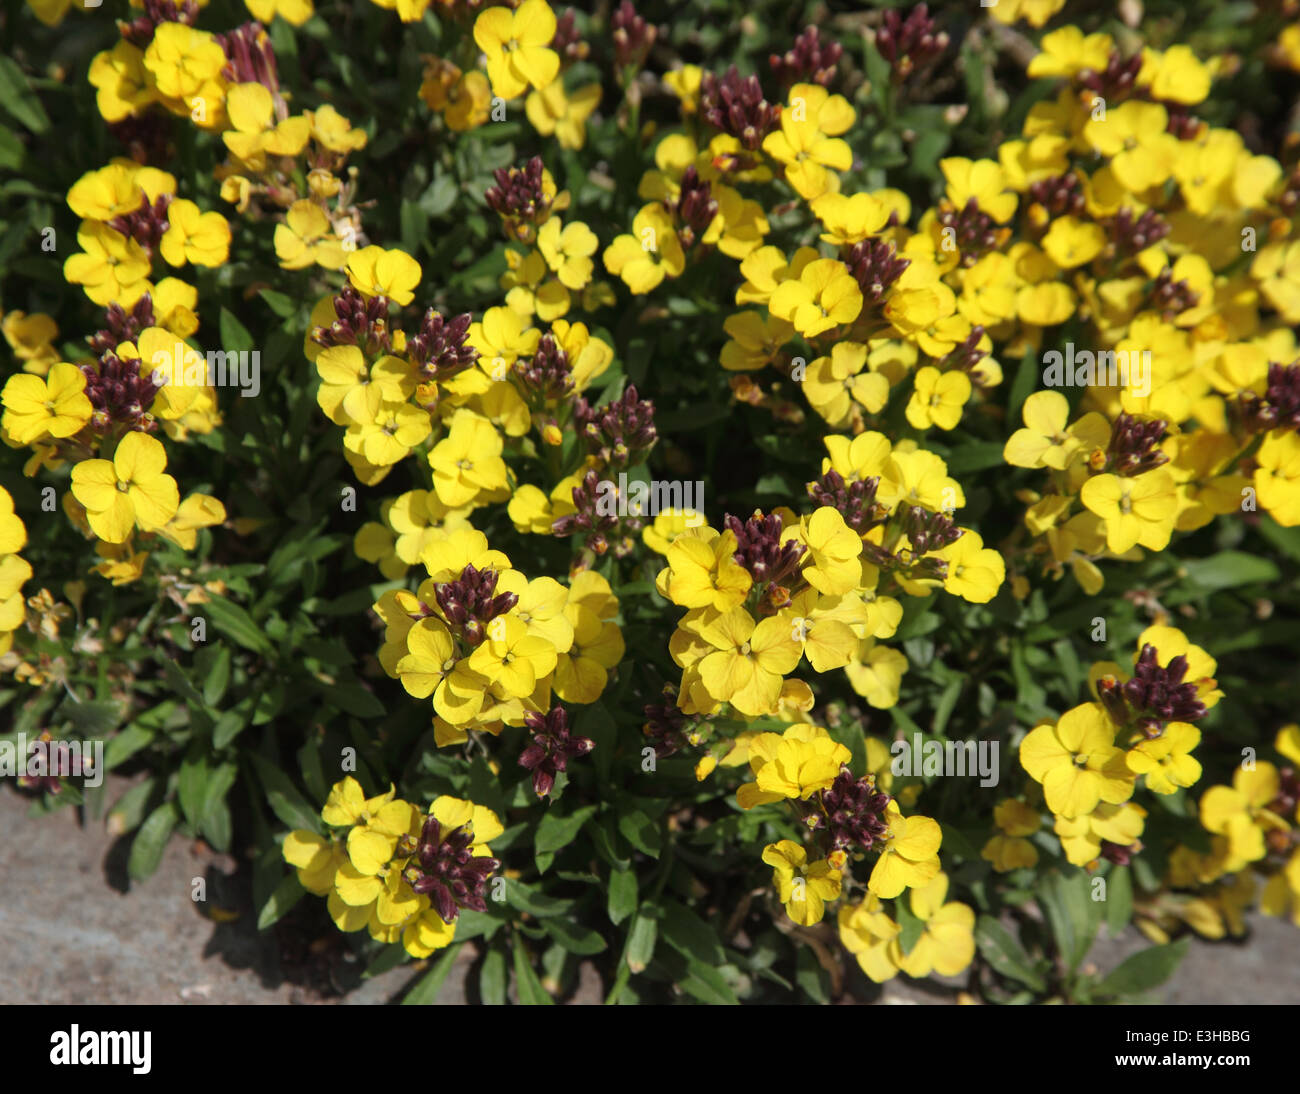 Erysimum 'Moonlight' close up of flowers Stock Photo